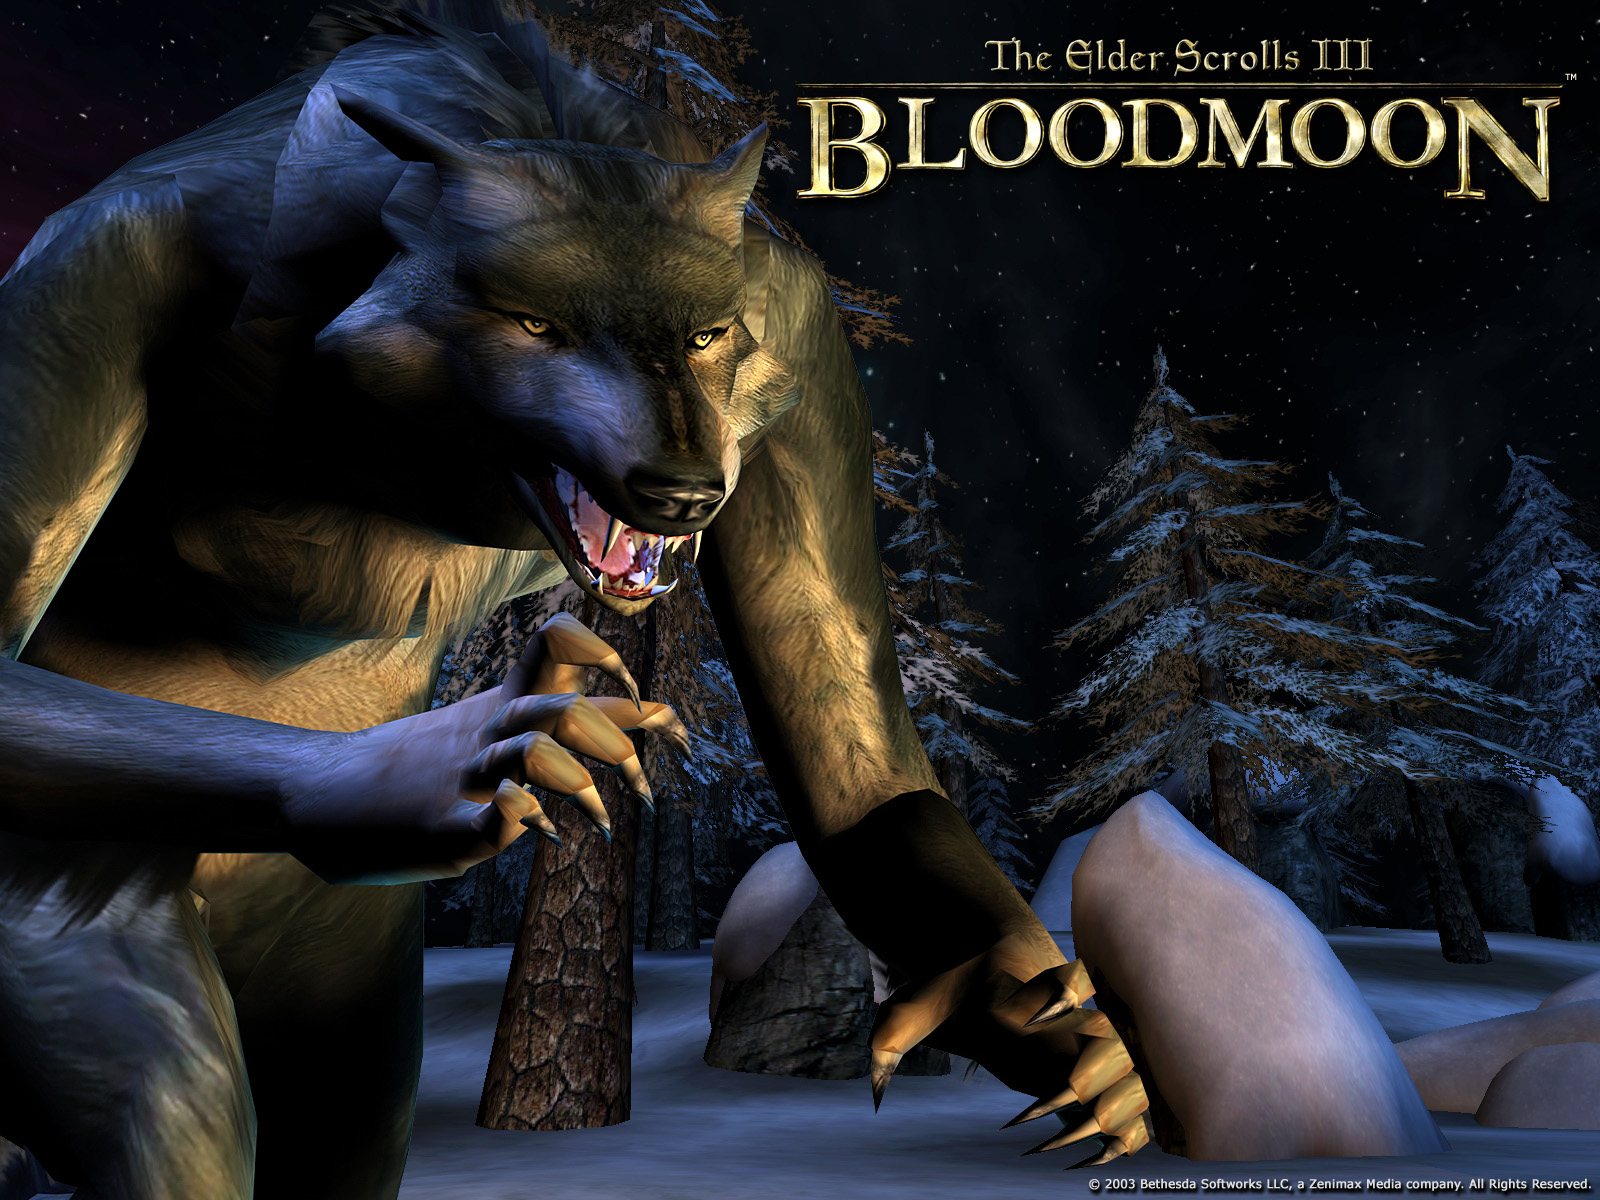 Wallpaper The Elder Scrolls III: Bloodmoon "Werewolf"